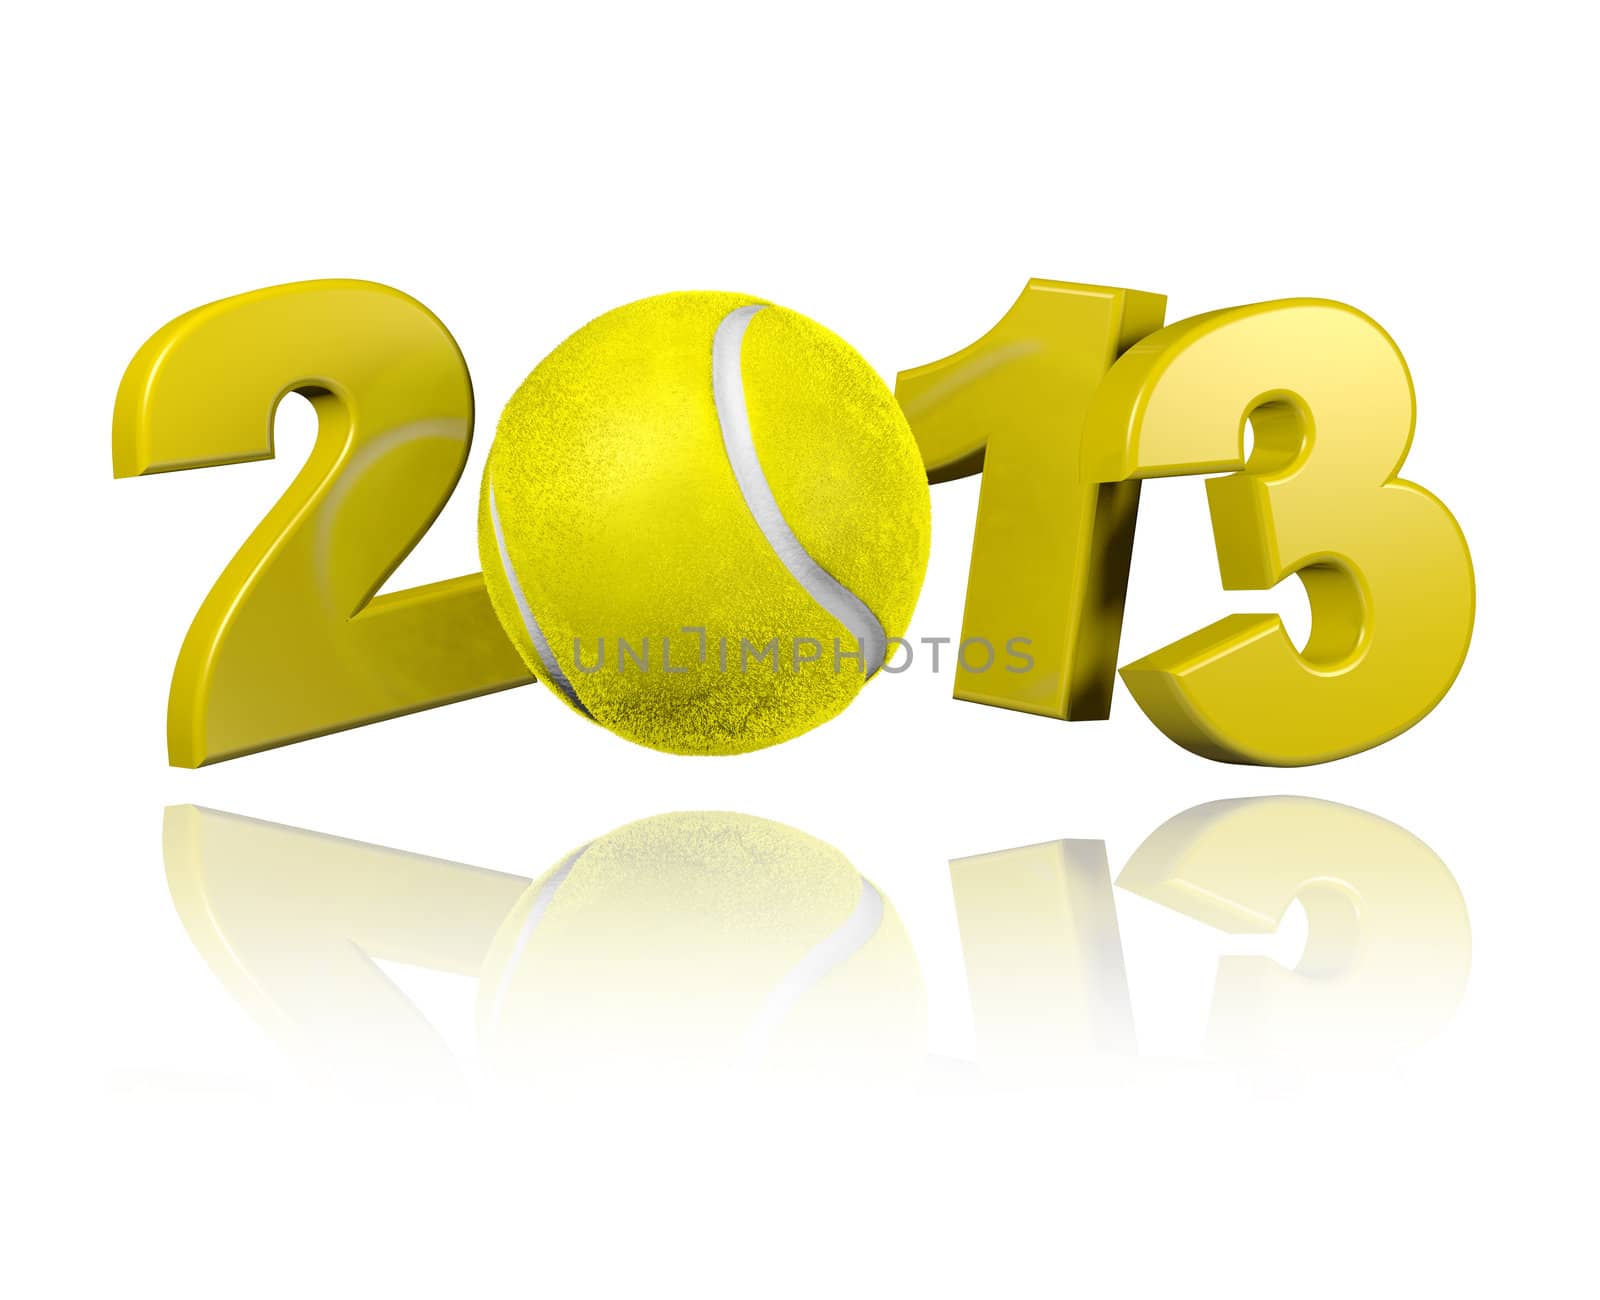 Tennis 2013 design by shkyo30